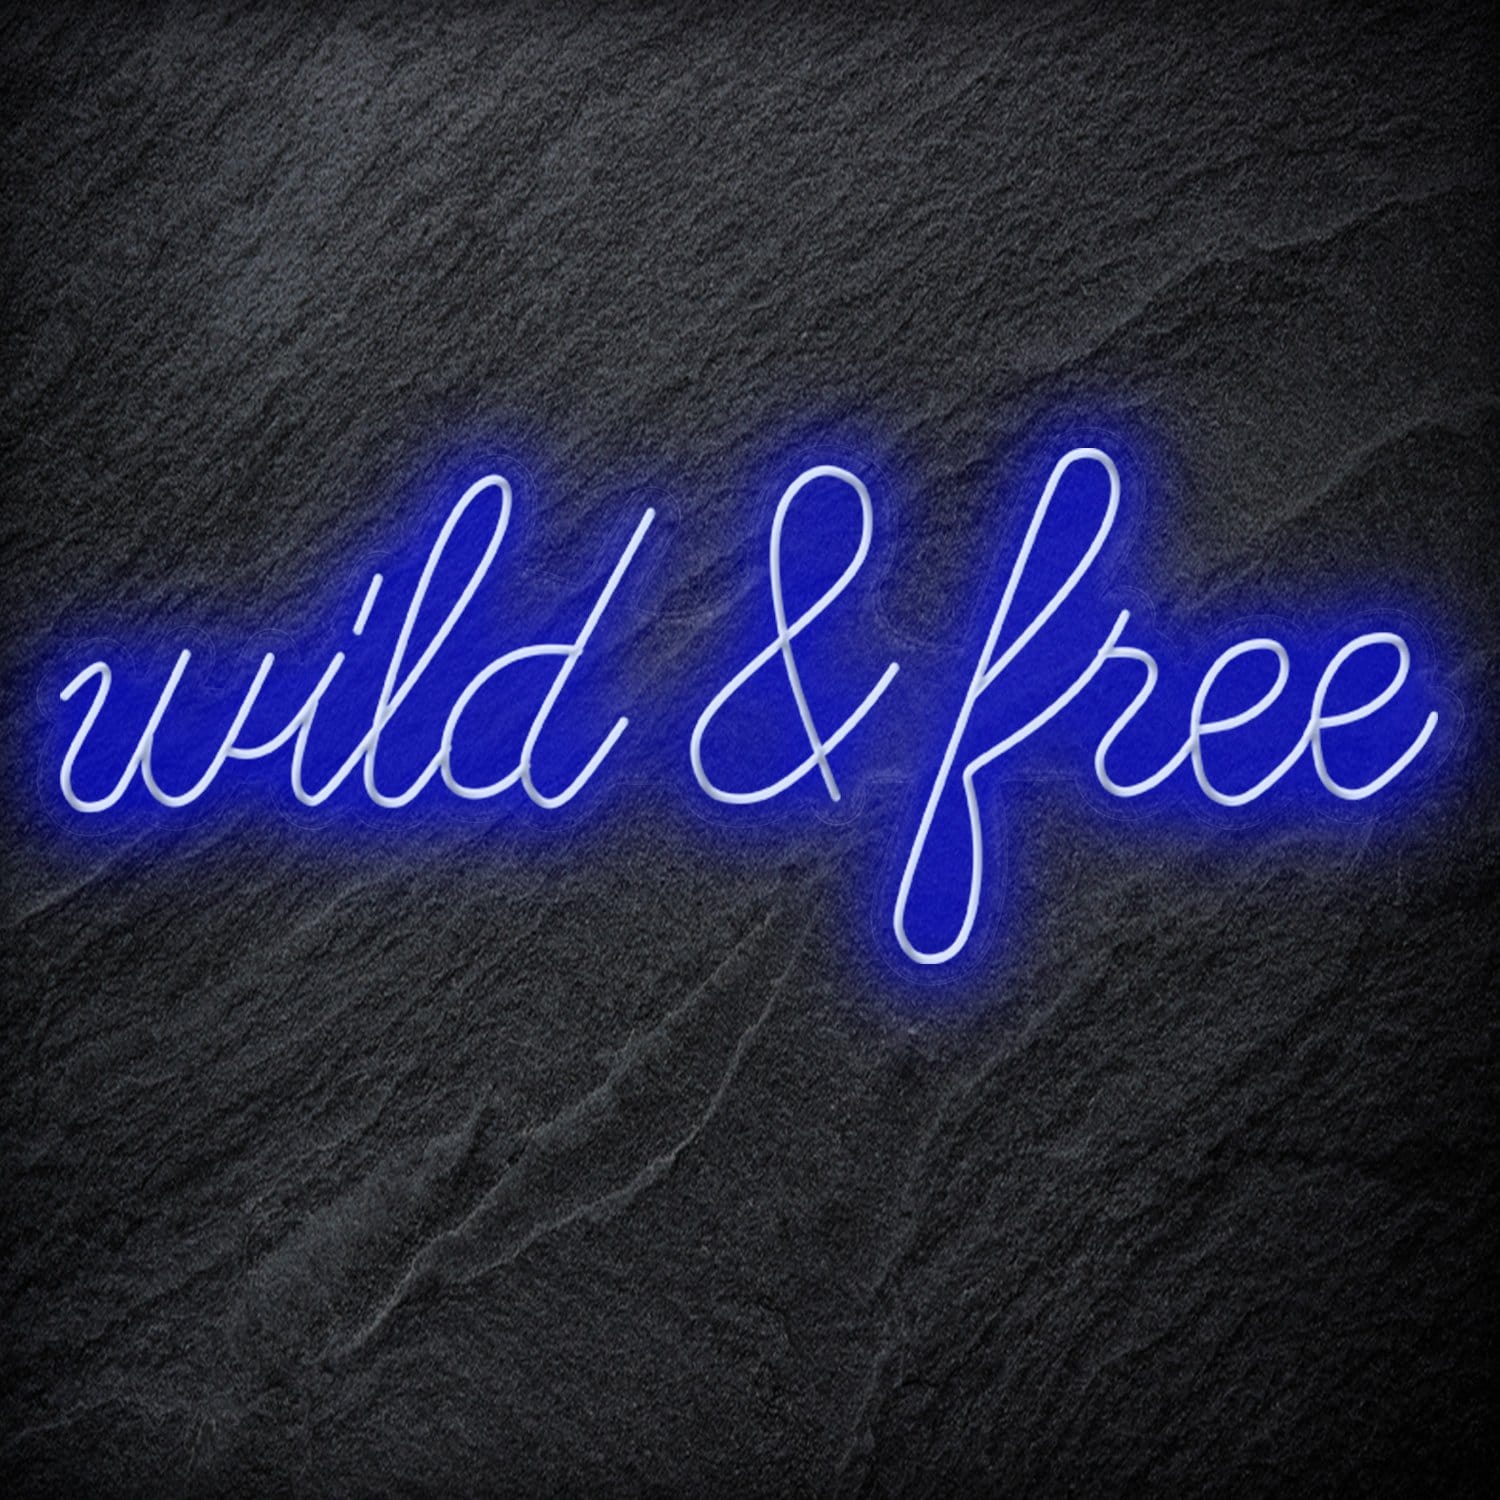 " Wild & Free " LED Neon Schriftzug - NEONEVERGLOW